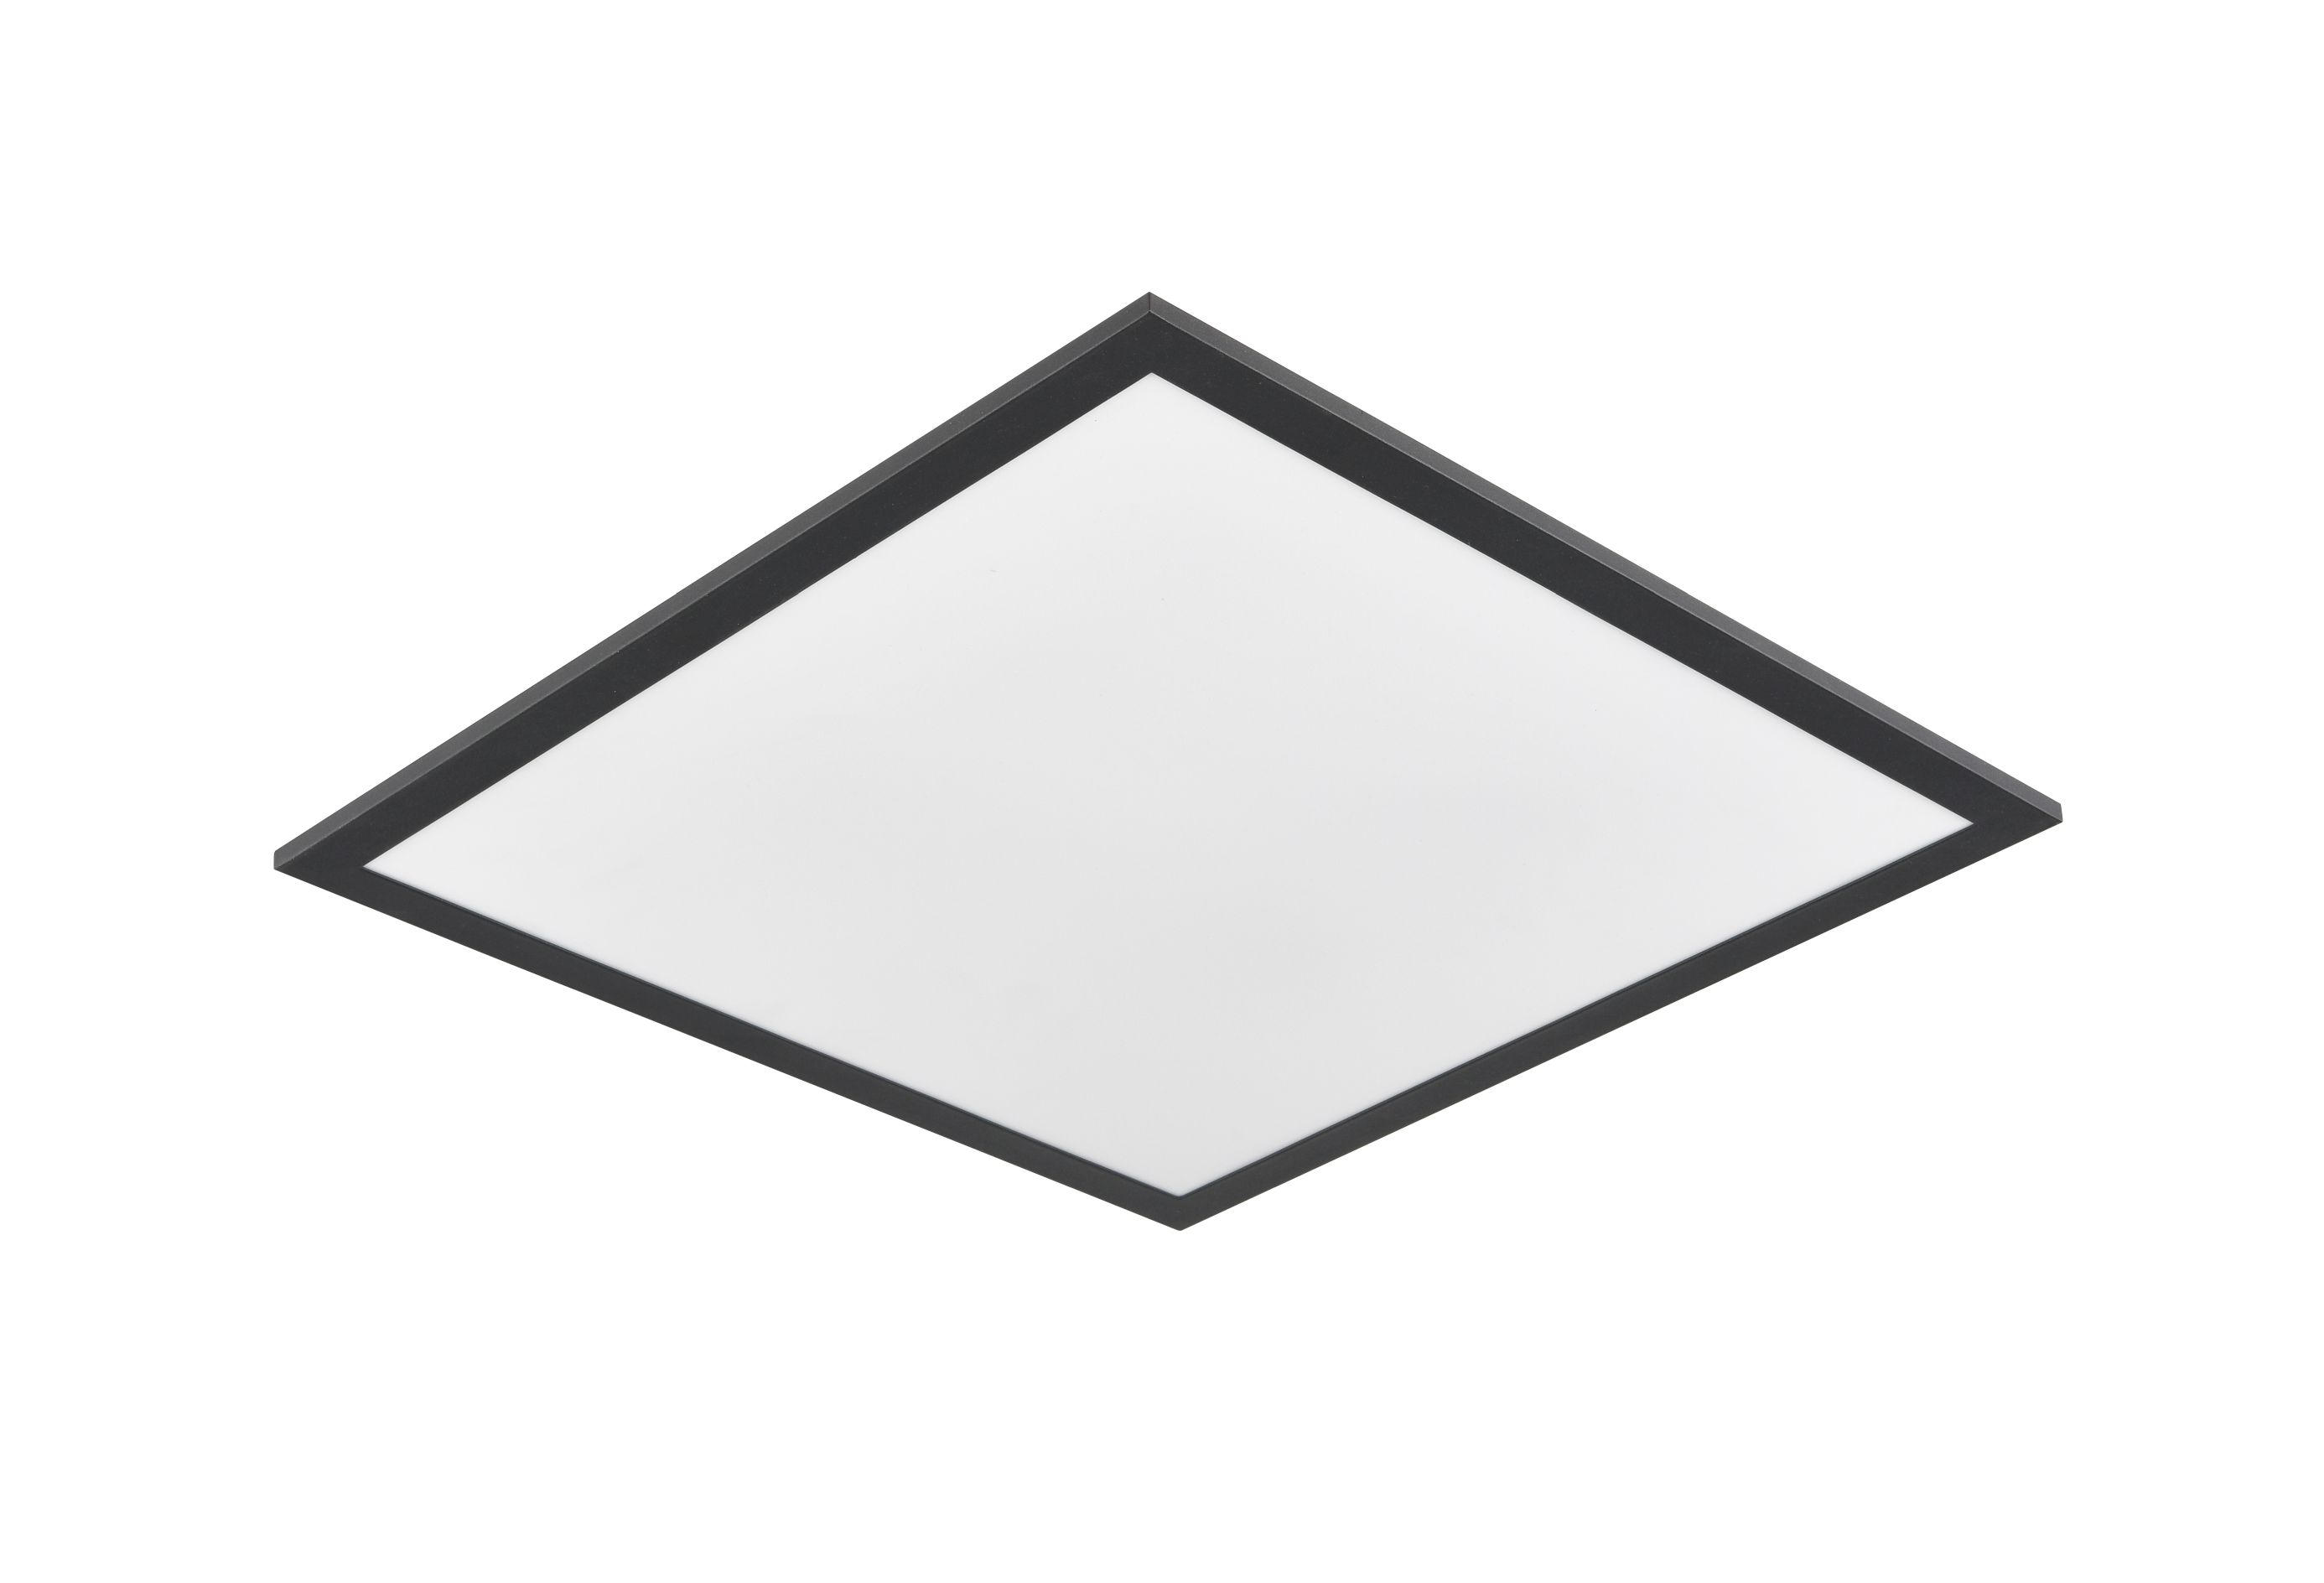 LED-PANEEL  - Schwarz/Weiß, Design, Kunststoff/Metall (45/45/4,5cm) - Novel